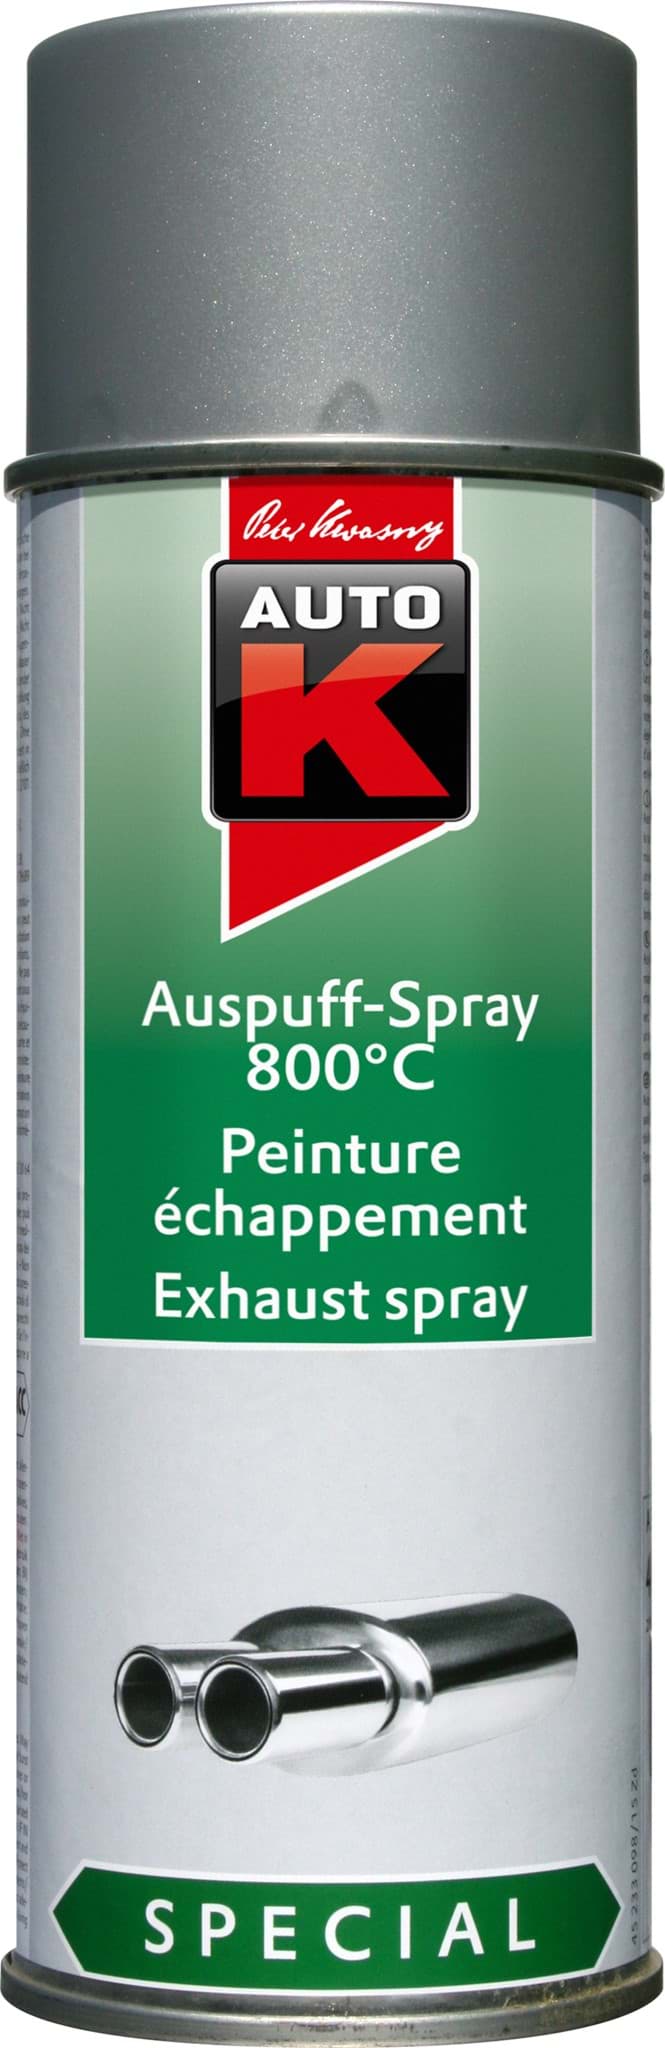 Picture of AutoK Auspuff Spray 800C° silber 400ml 233098 